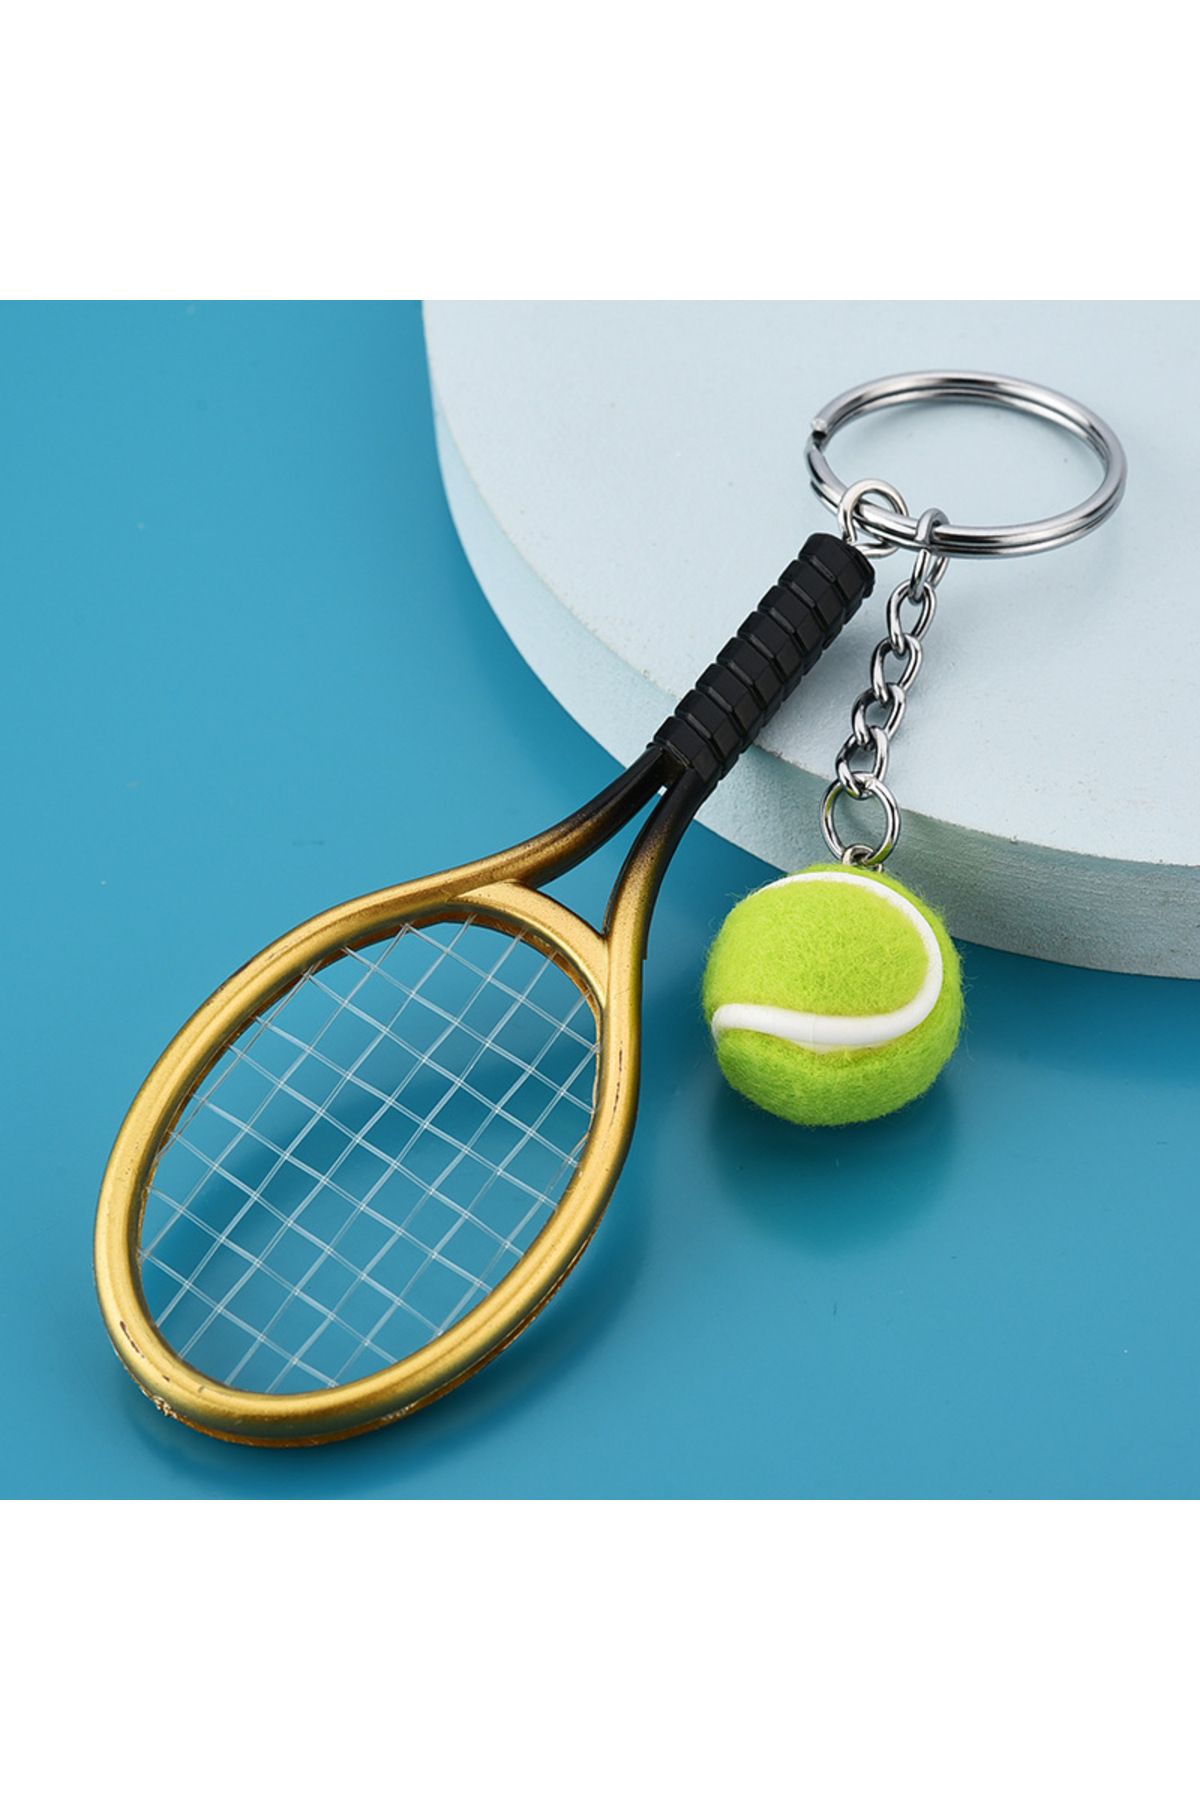 AYCANSTORE Tenis Raketi ve Tenis Topu Anahtarlık